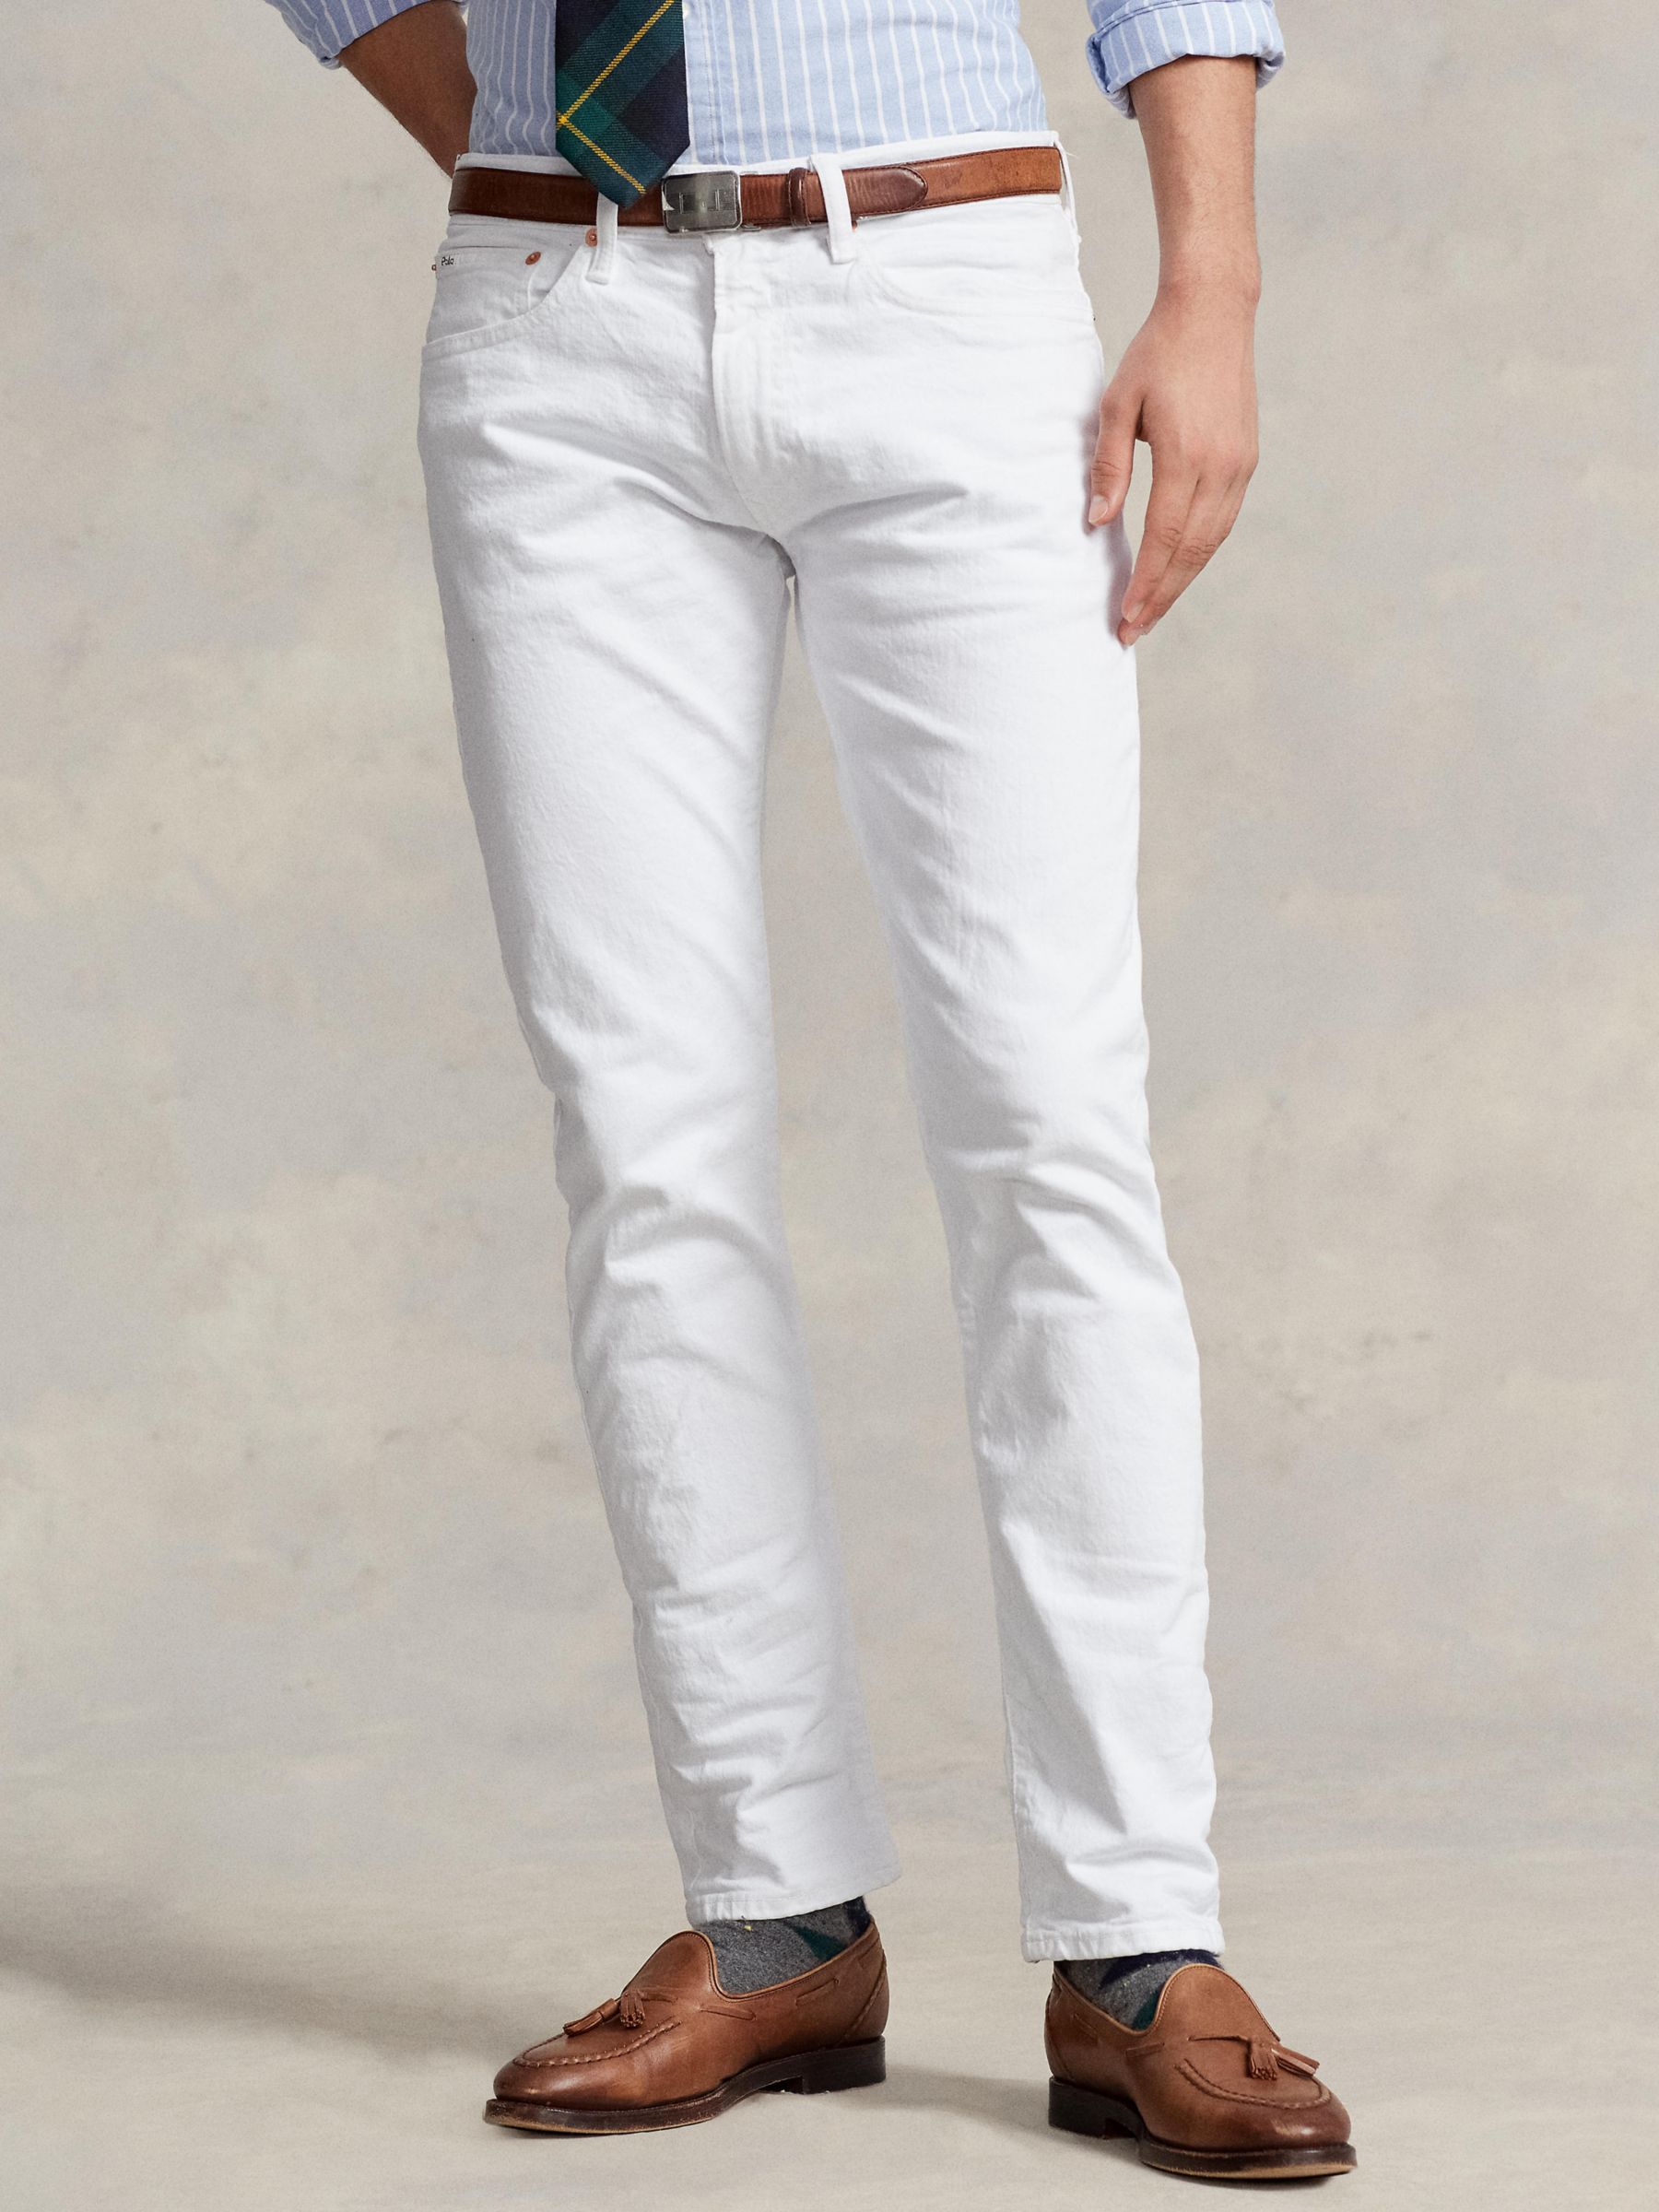 Ralph Lauren Sullivan Slim Stretch Fit Five Pocket Jeans, White, 34R